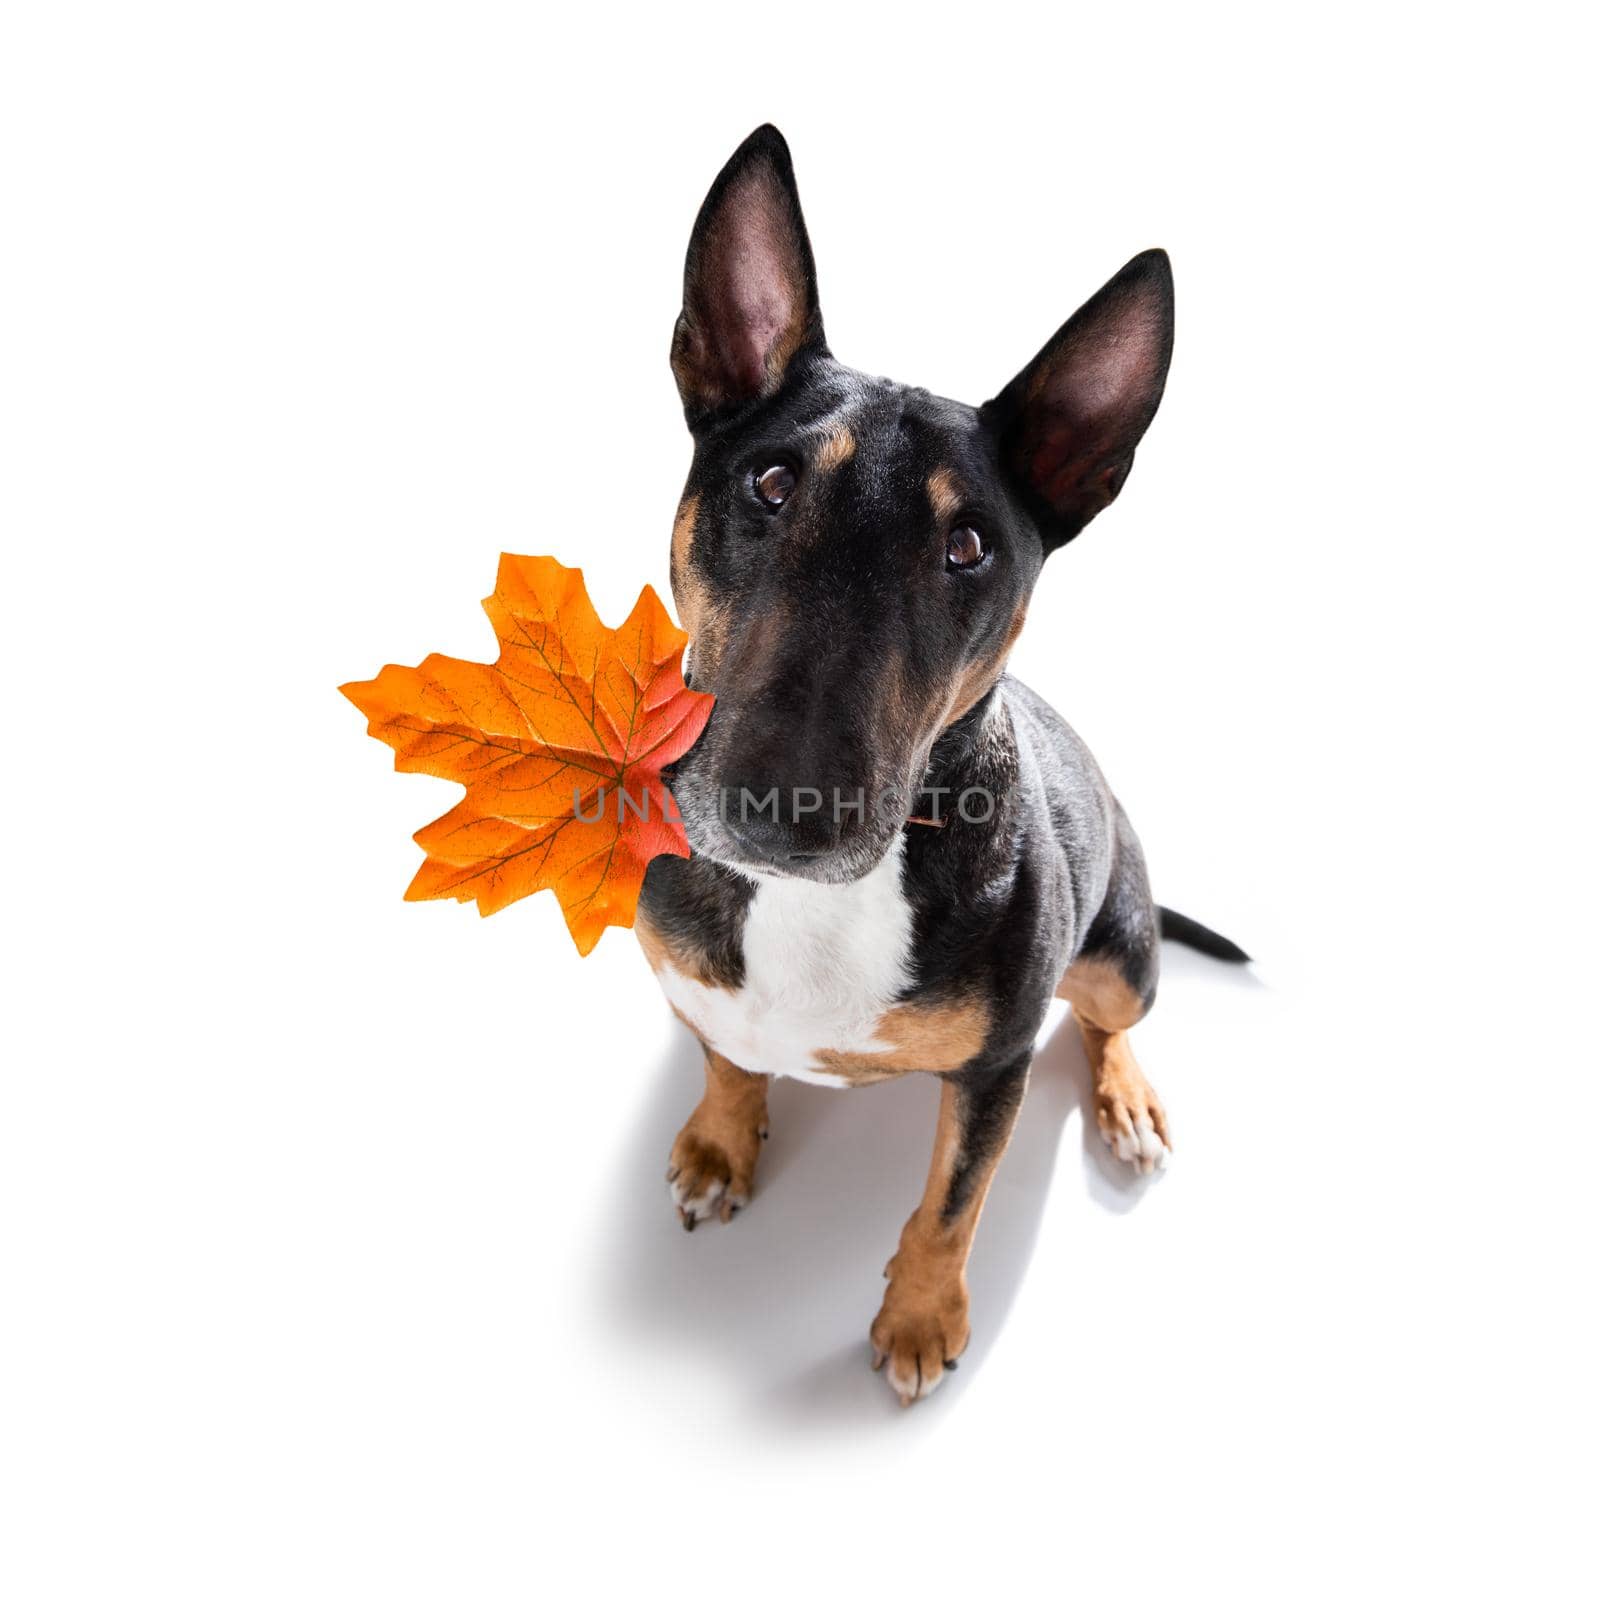 Autumn fall dog by Brosch